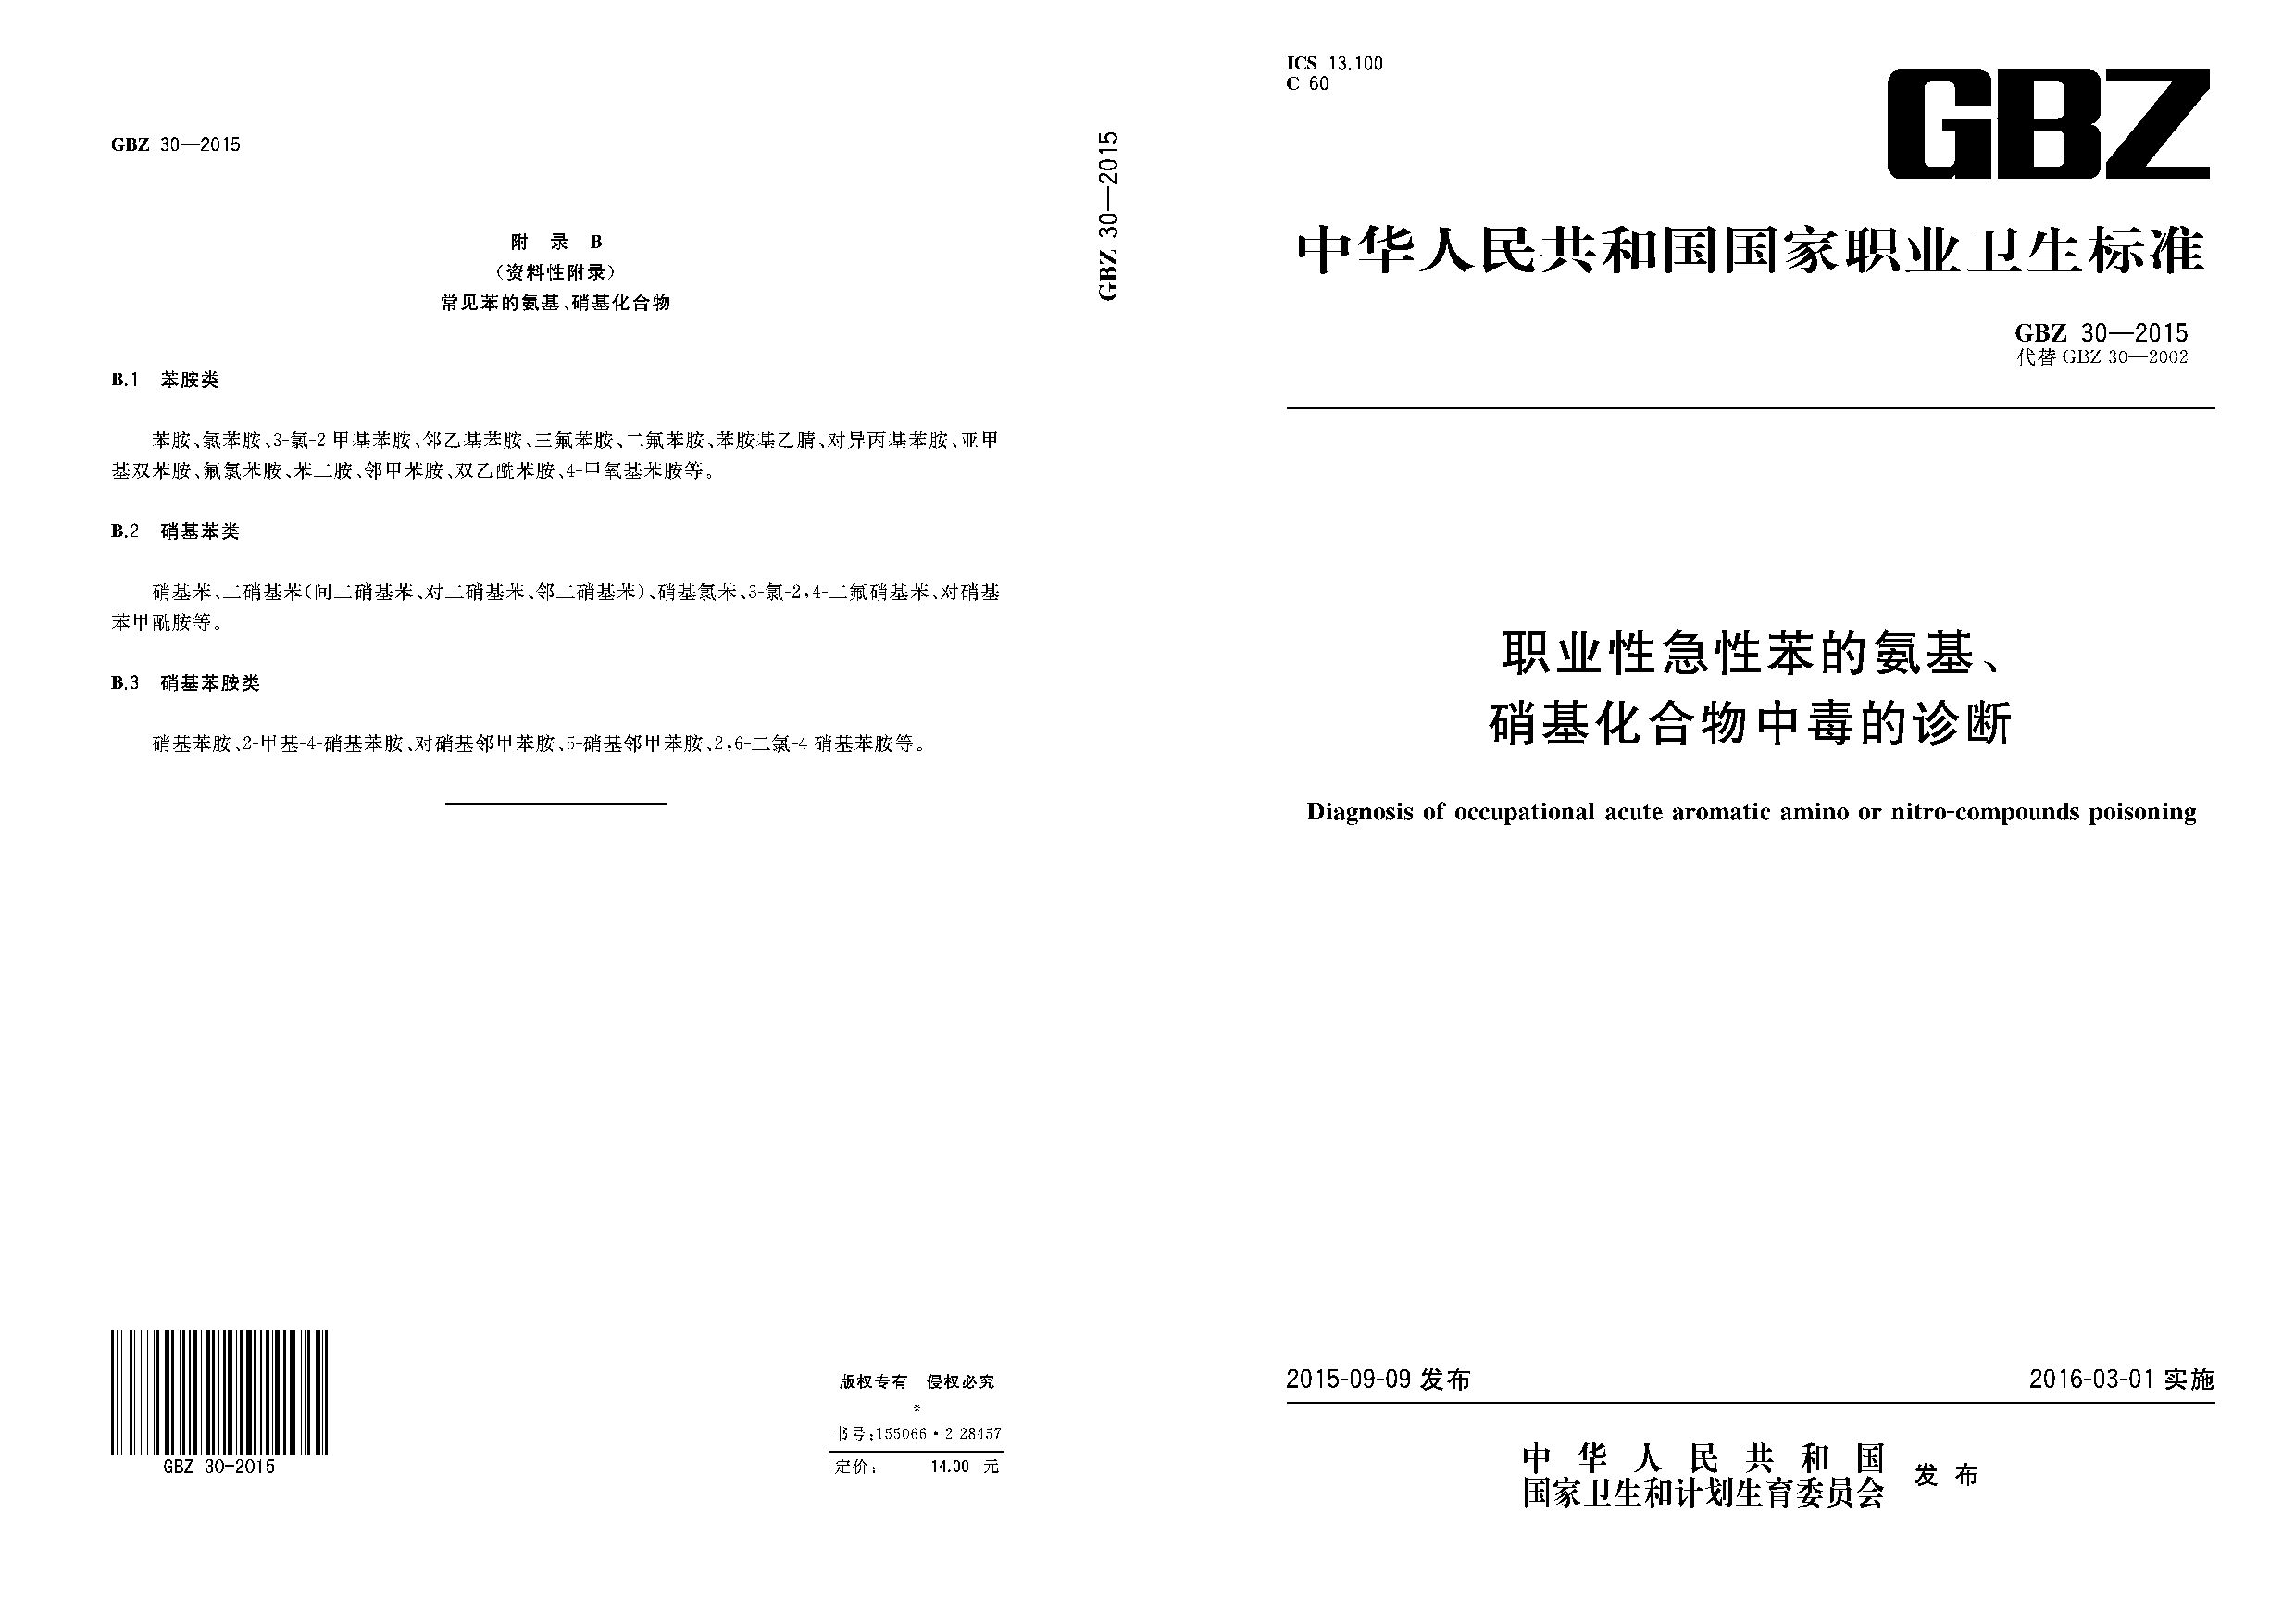 GBZ 30-2015封面图